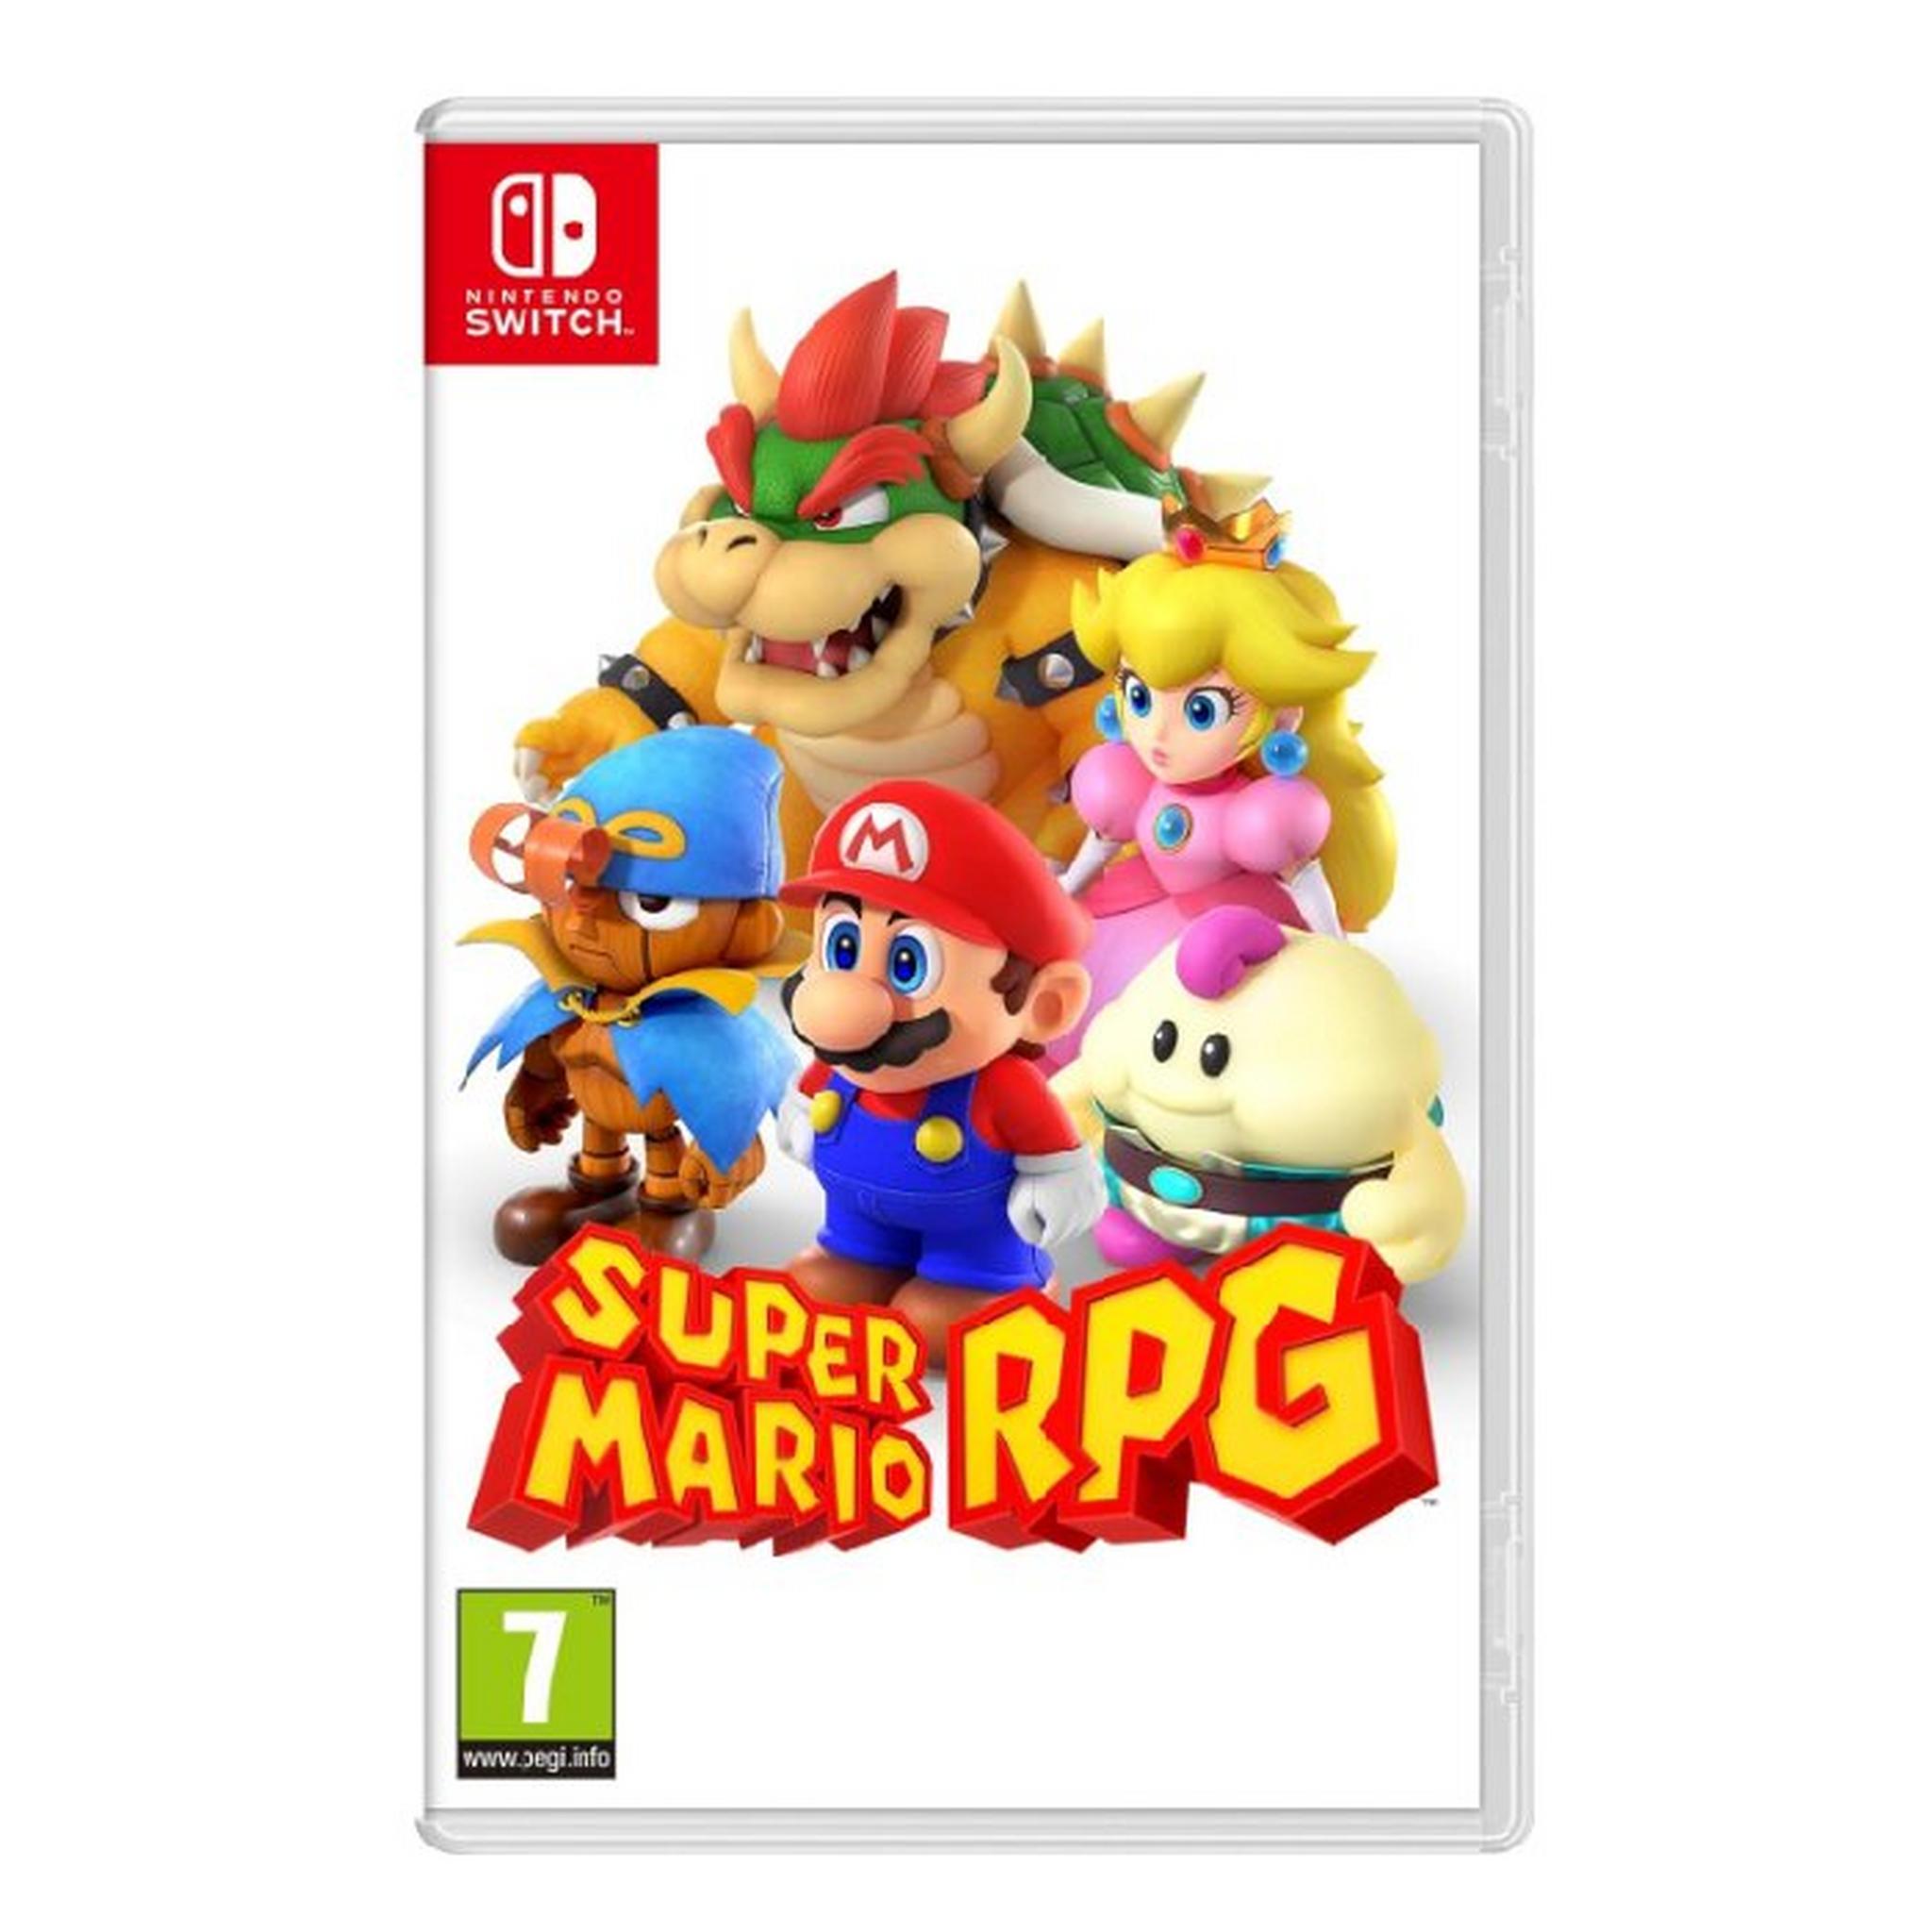 Super Mario RPG Game for Nintendo switch